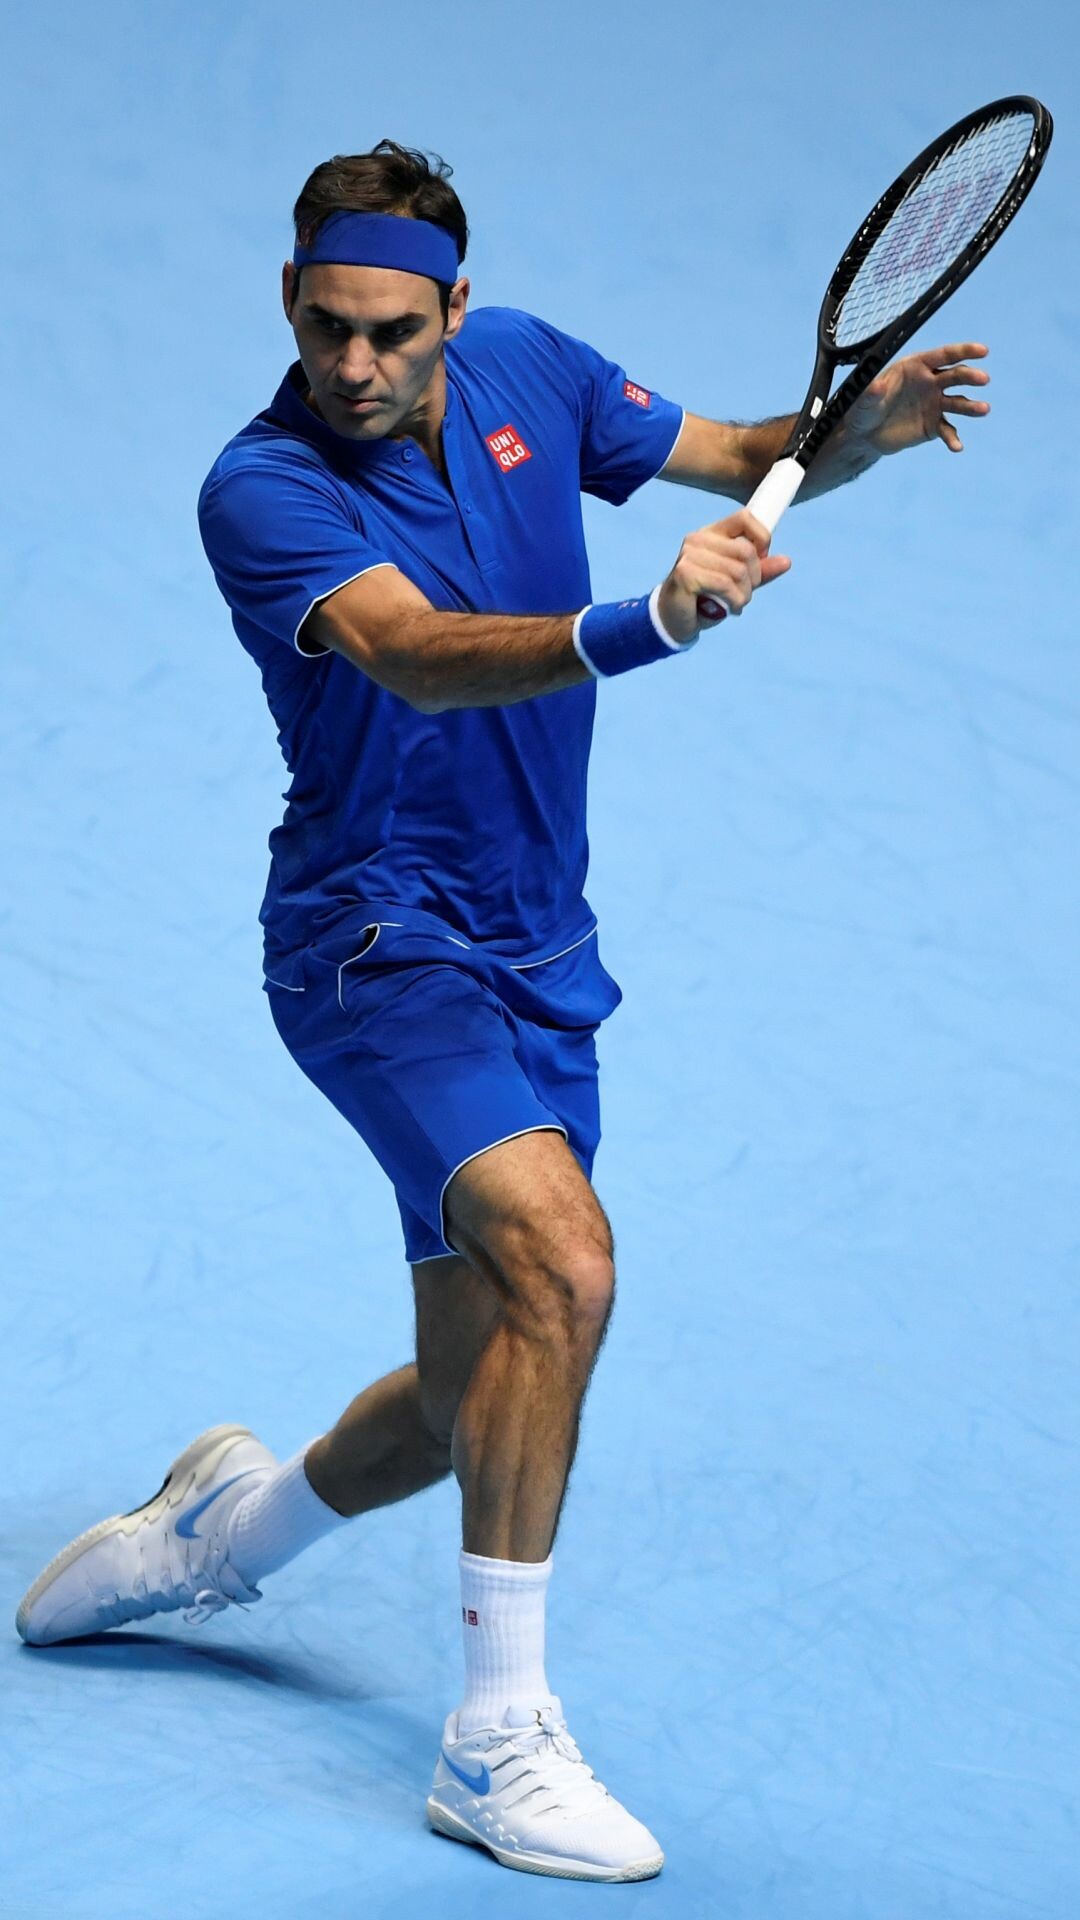 Roger Federer: He won the 2009 Cincinnati Masters, defeating Novak Djokovic in the final. 1080x1920 Full HD Wallpaper.